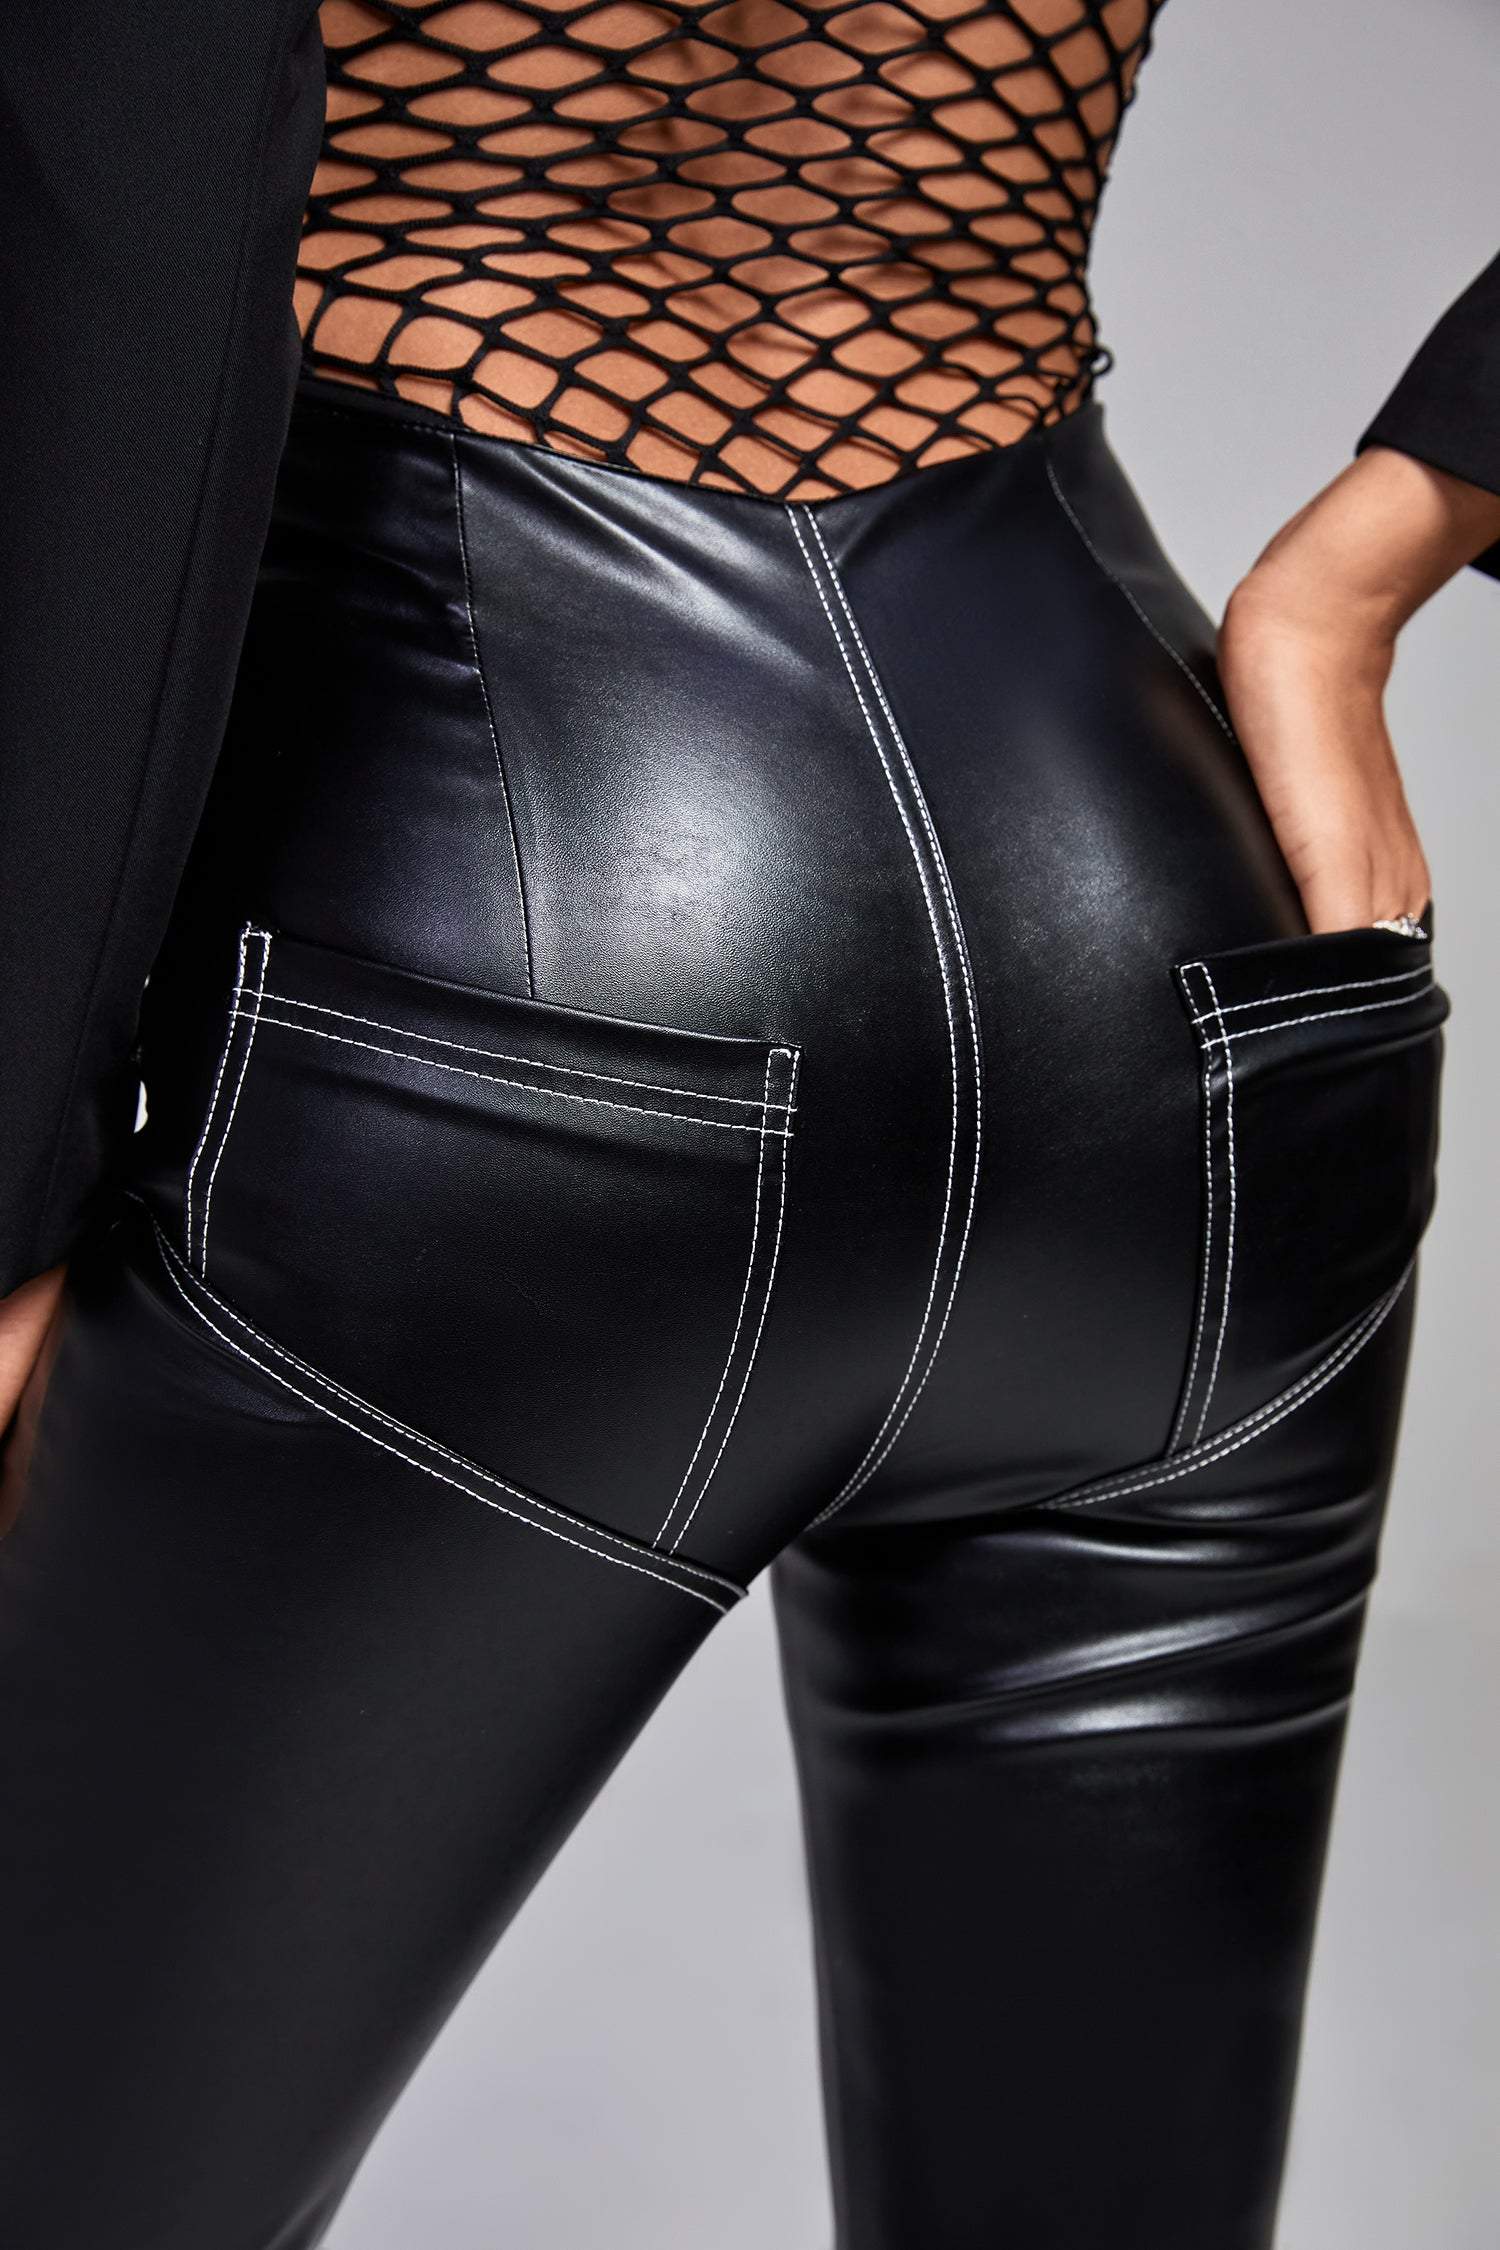 Subra Leather Pants